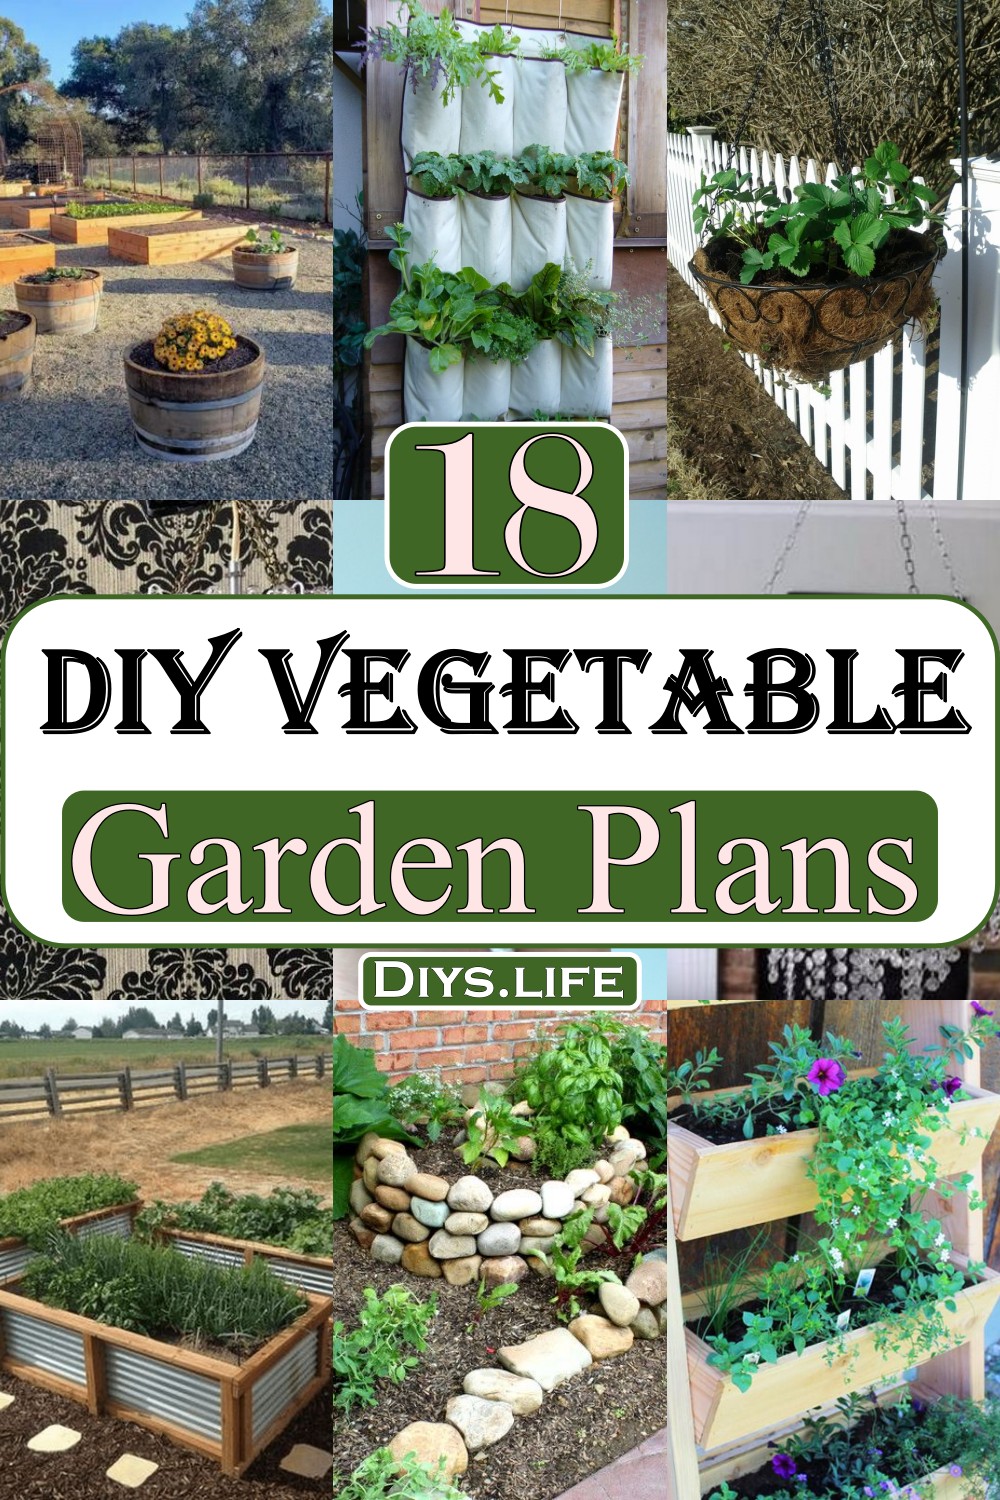 DIY Vegetable Garden Plans